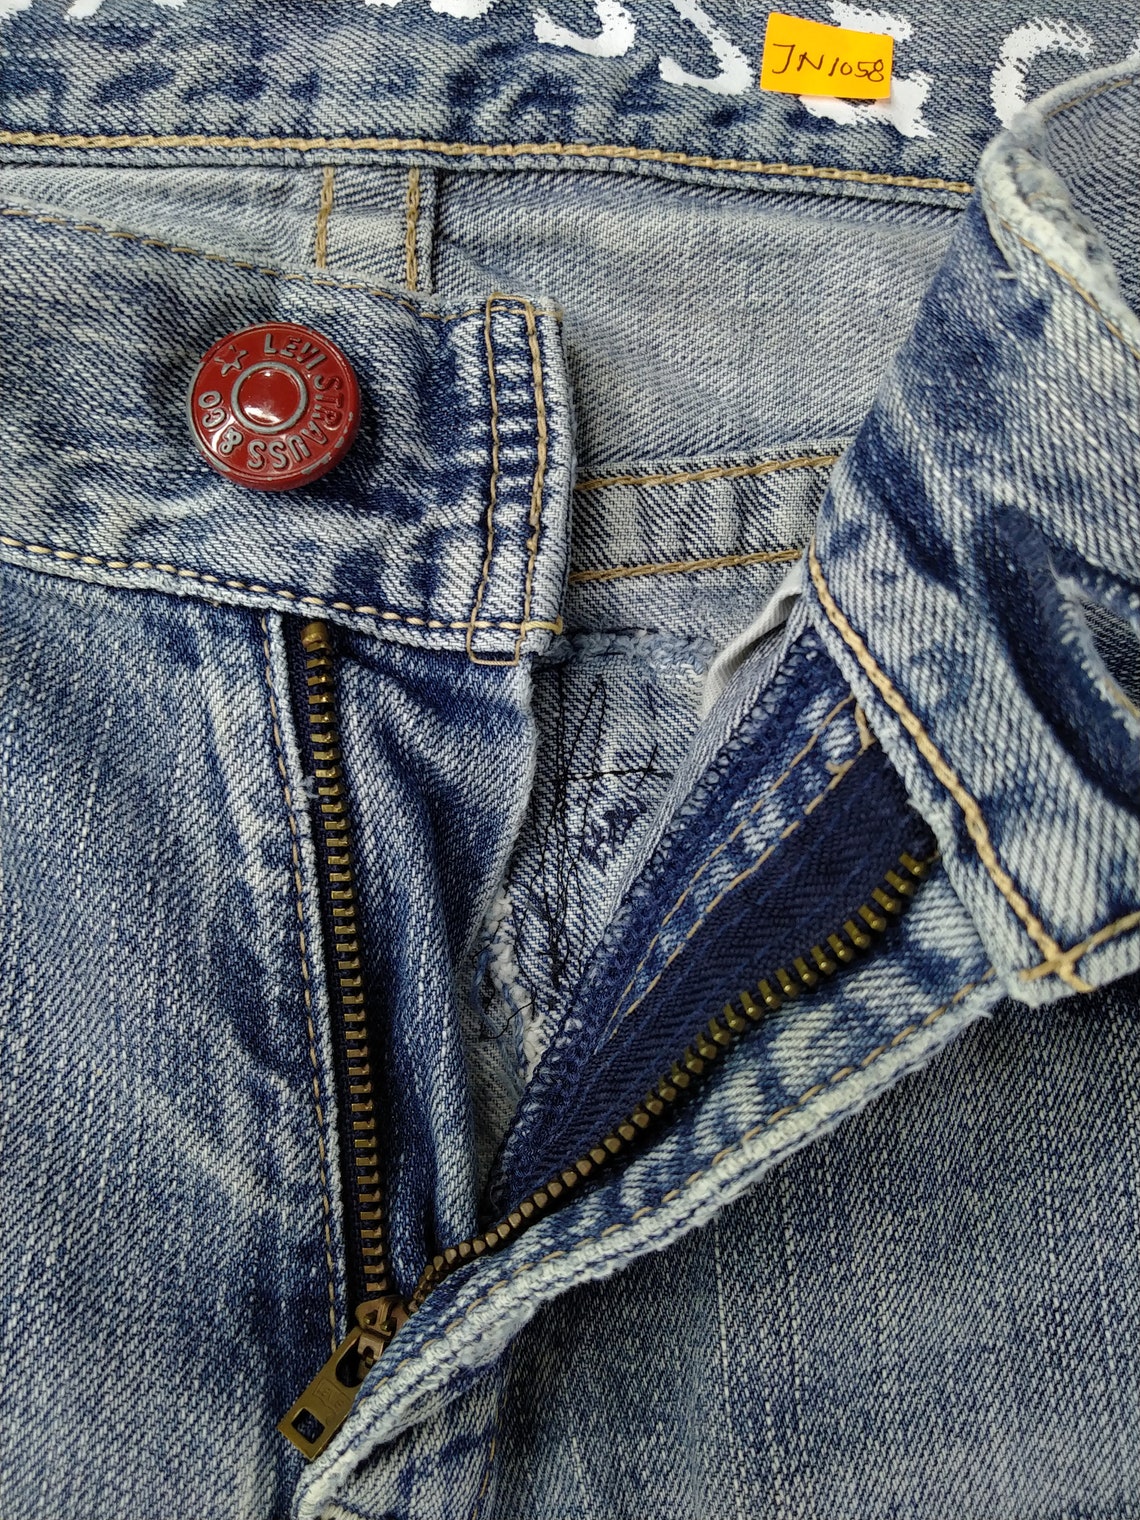 Vintage Levi's 502 Jeans 32x30 Light Wash Denim Red Tab | Etsy